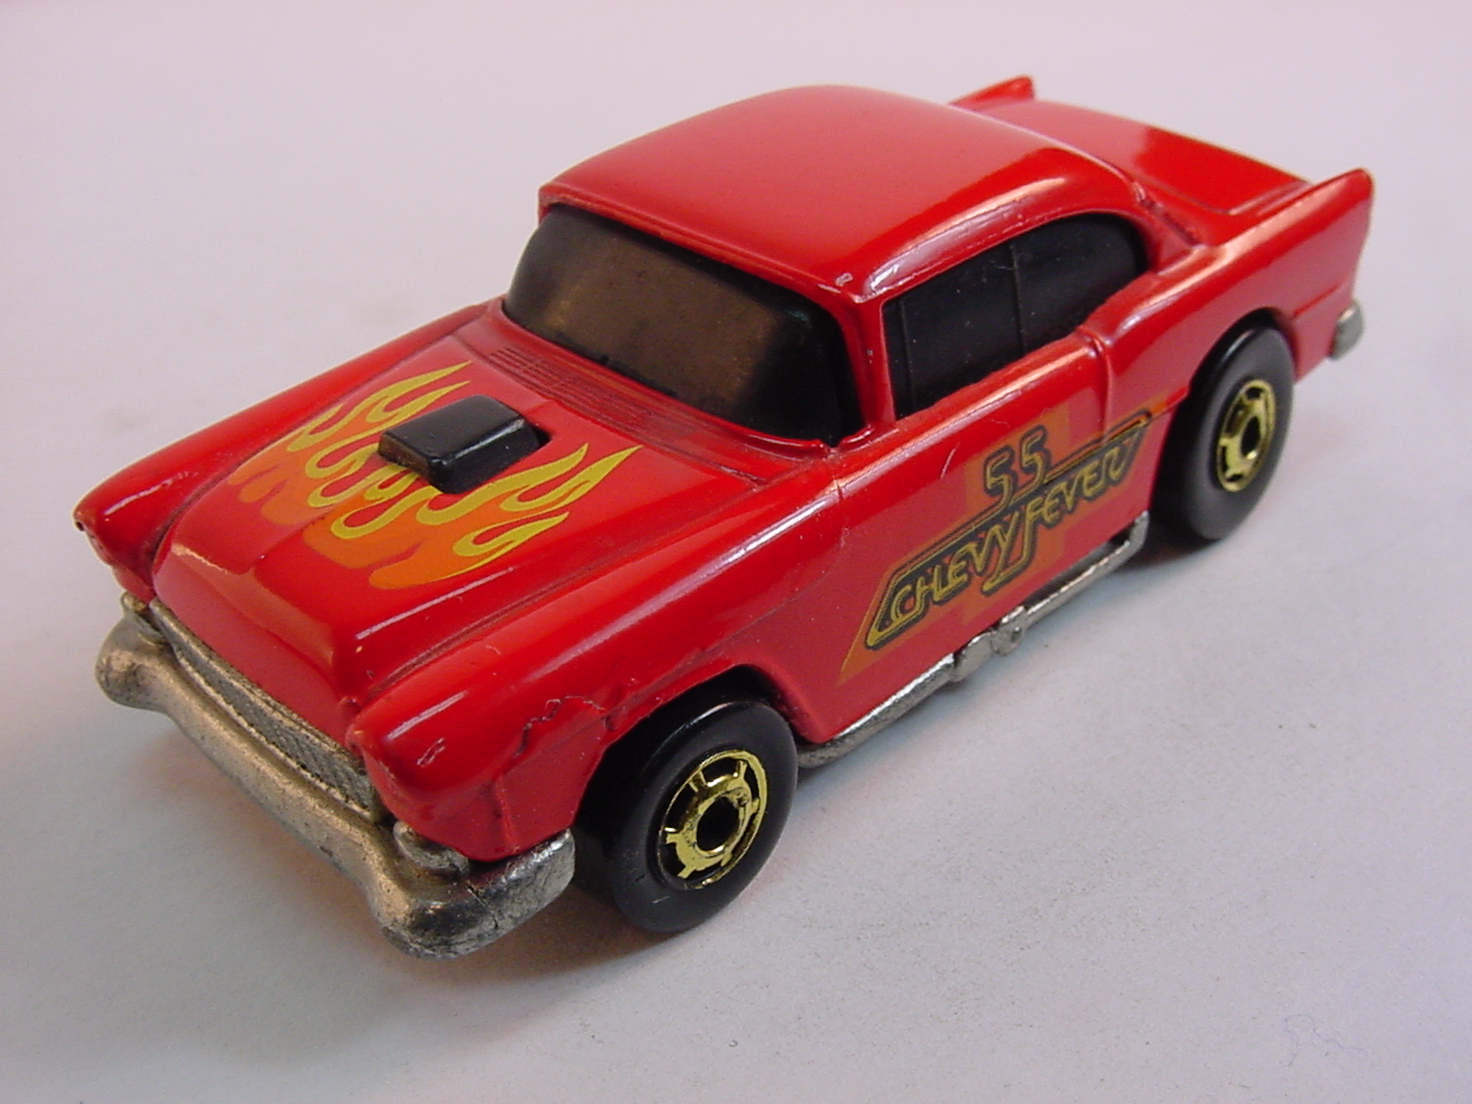 55 Chevy (1982) | Hot Wheels Wiki | Fandom